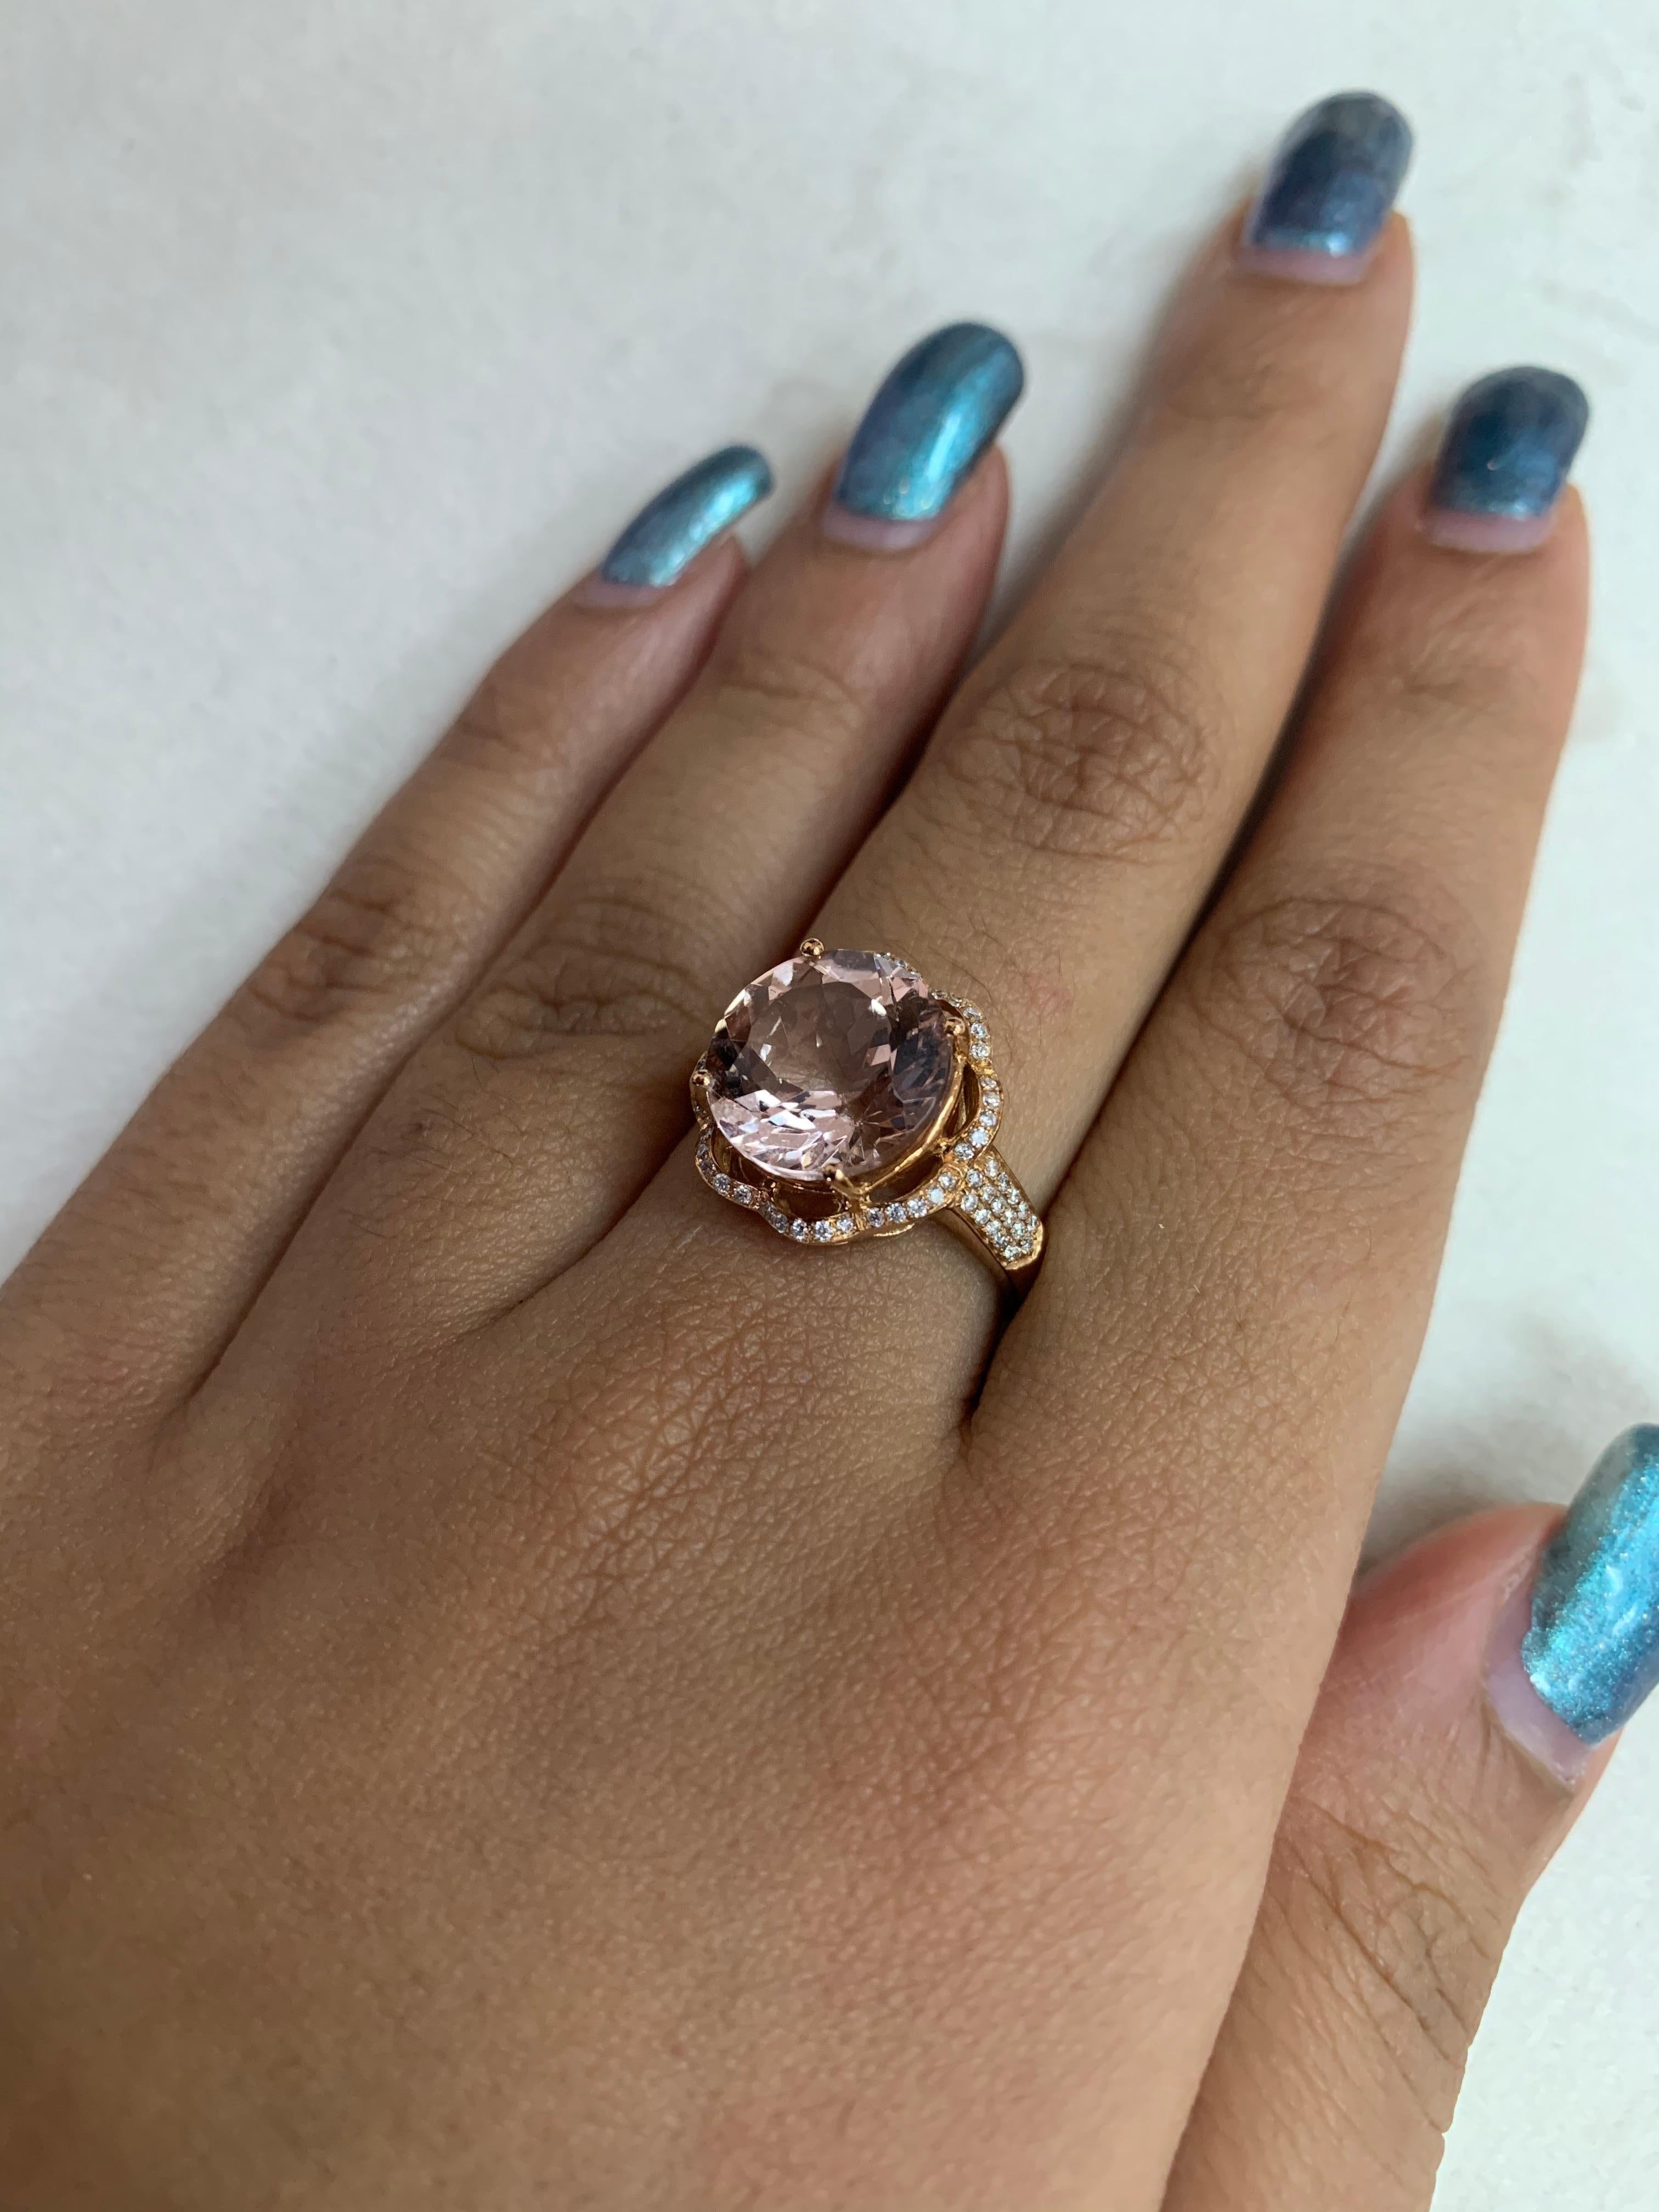 4.5 carat diamond ring